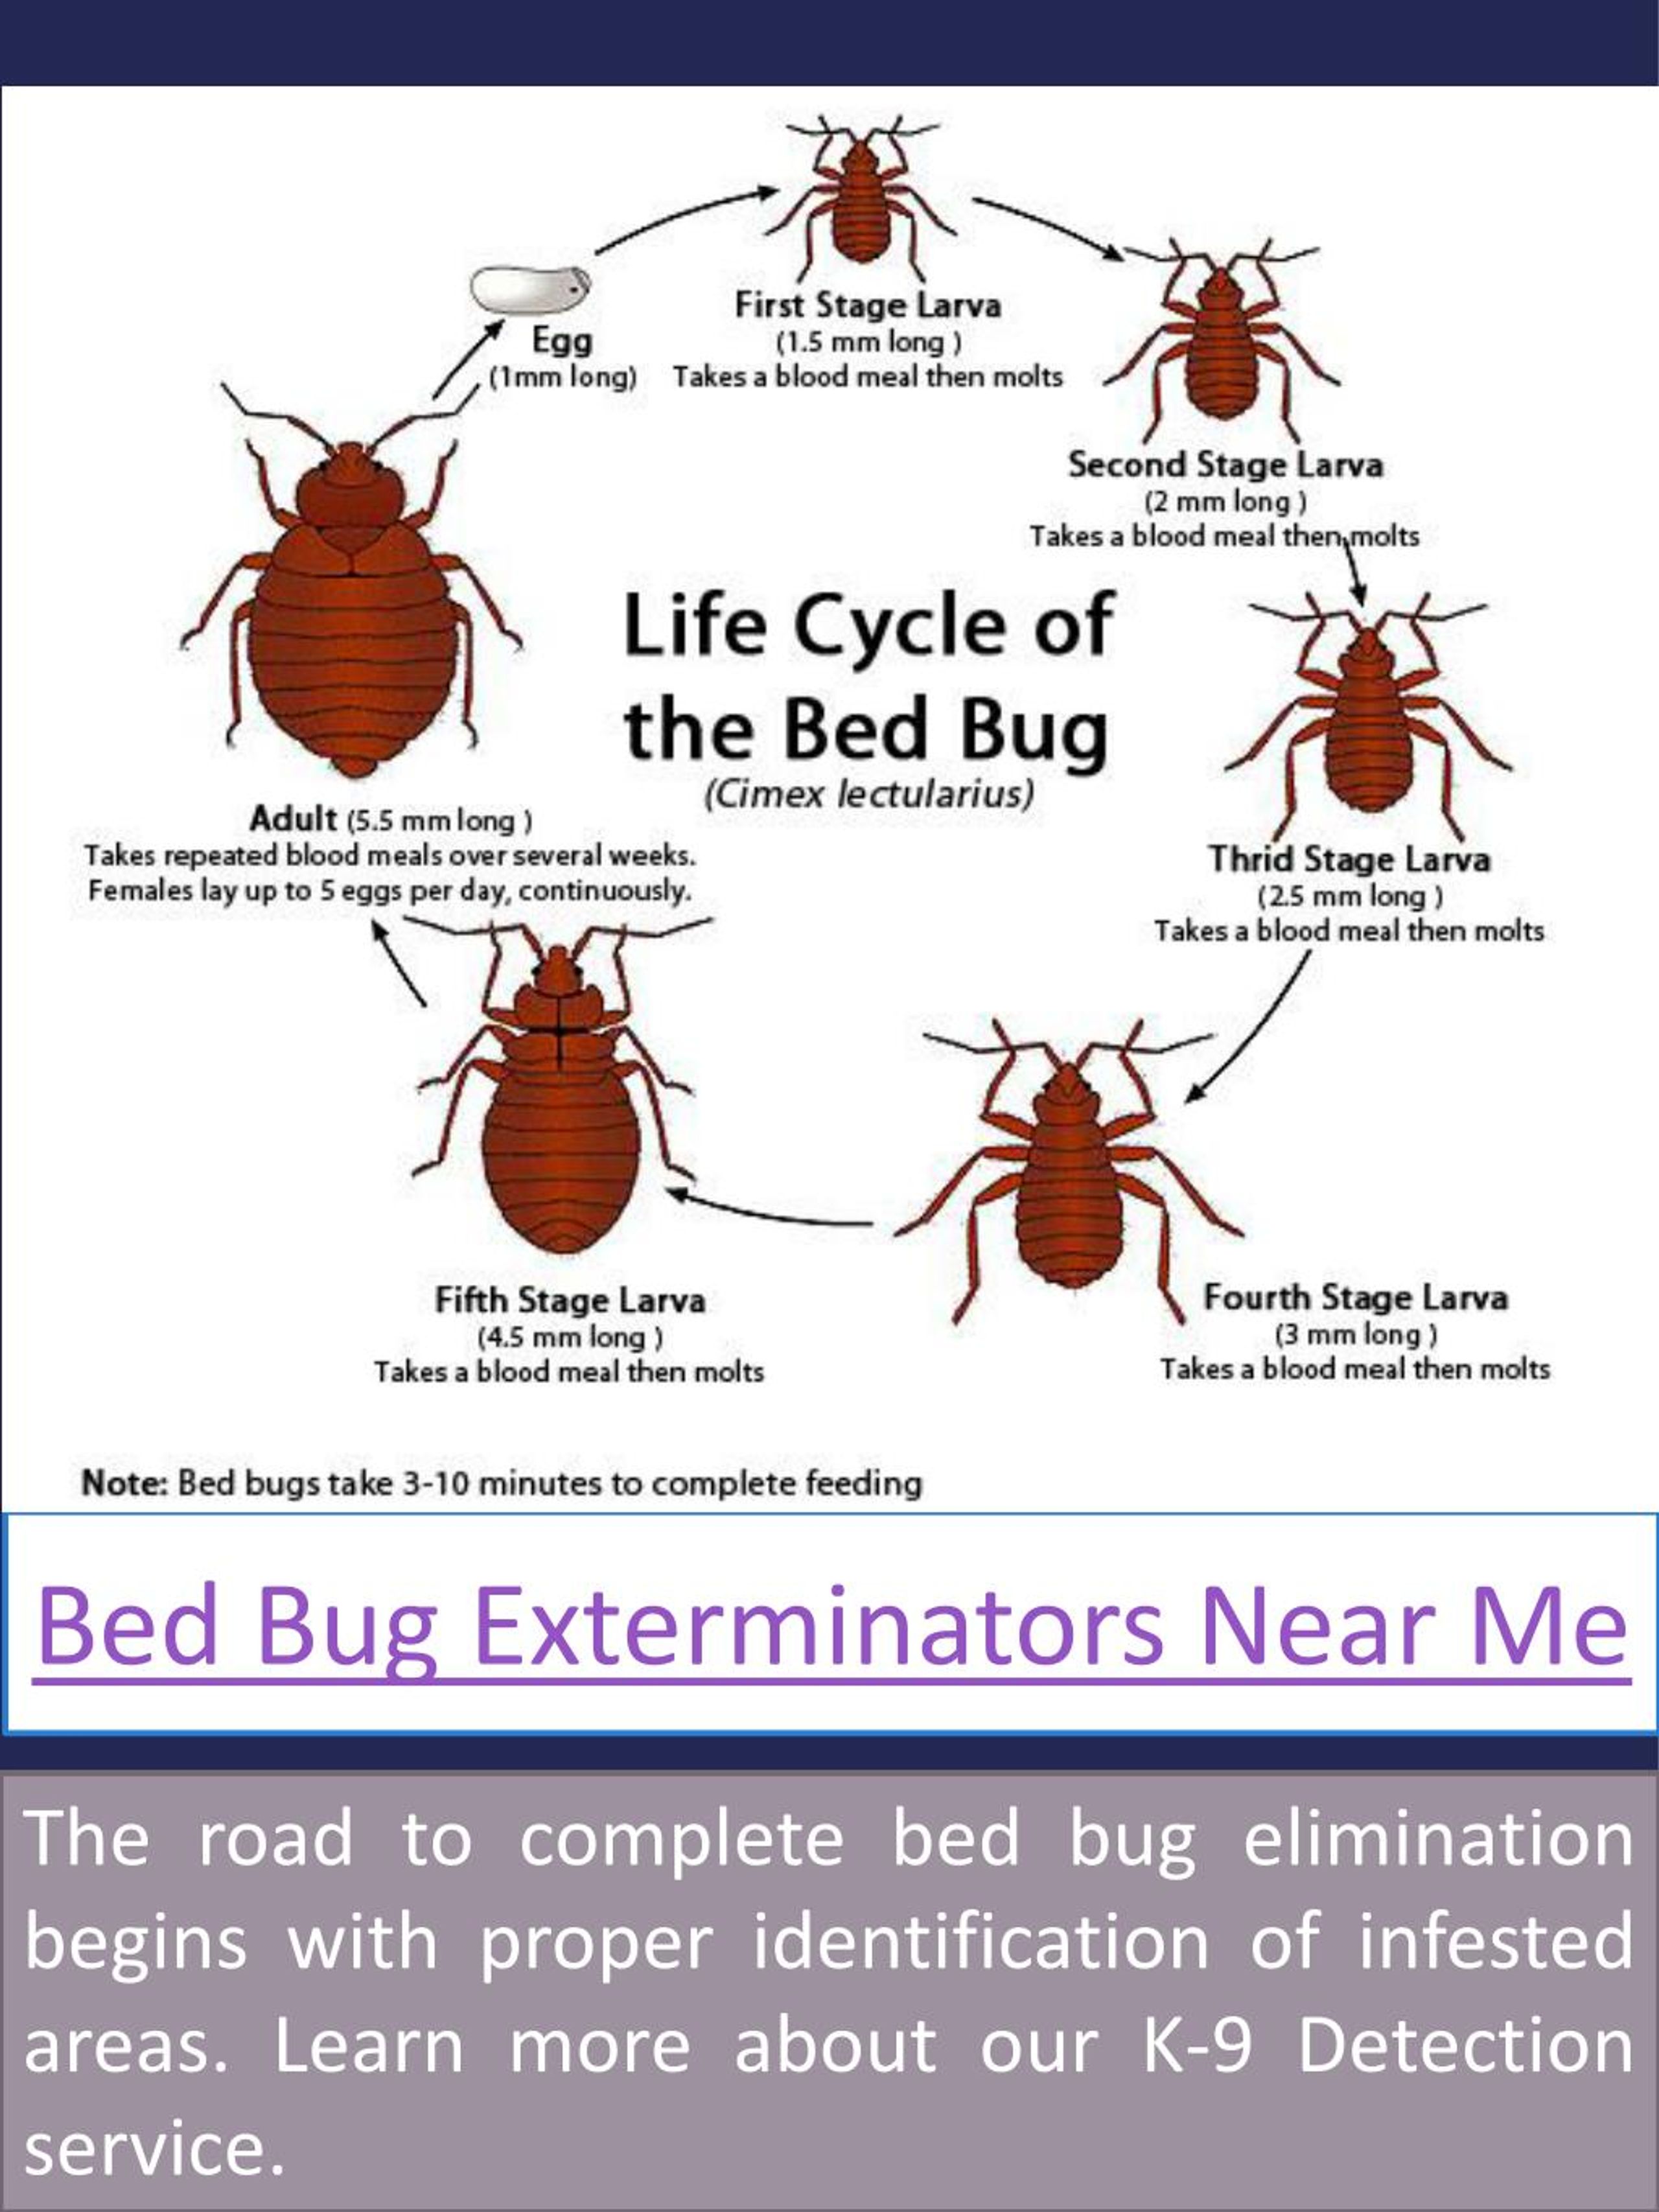 PPT - bed bug exterminators near me PowerPoint ...